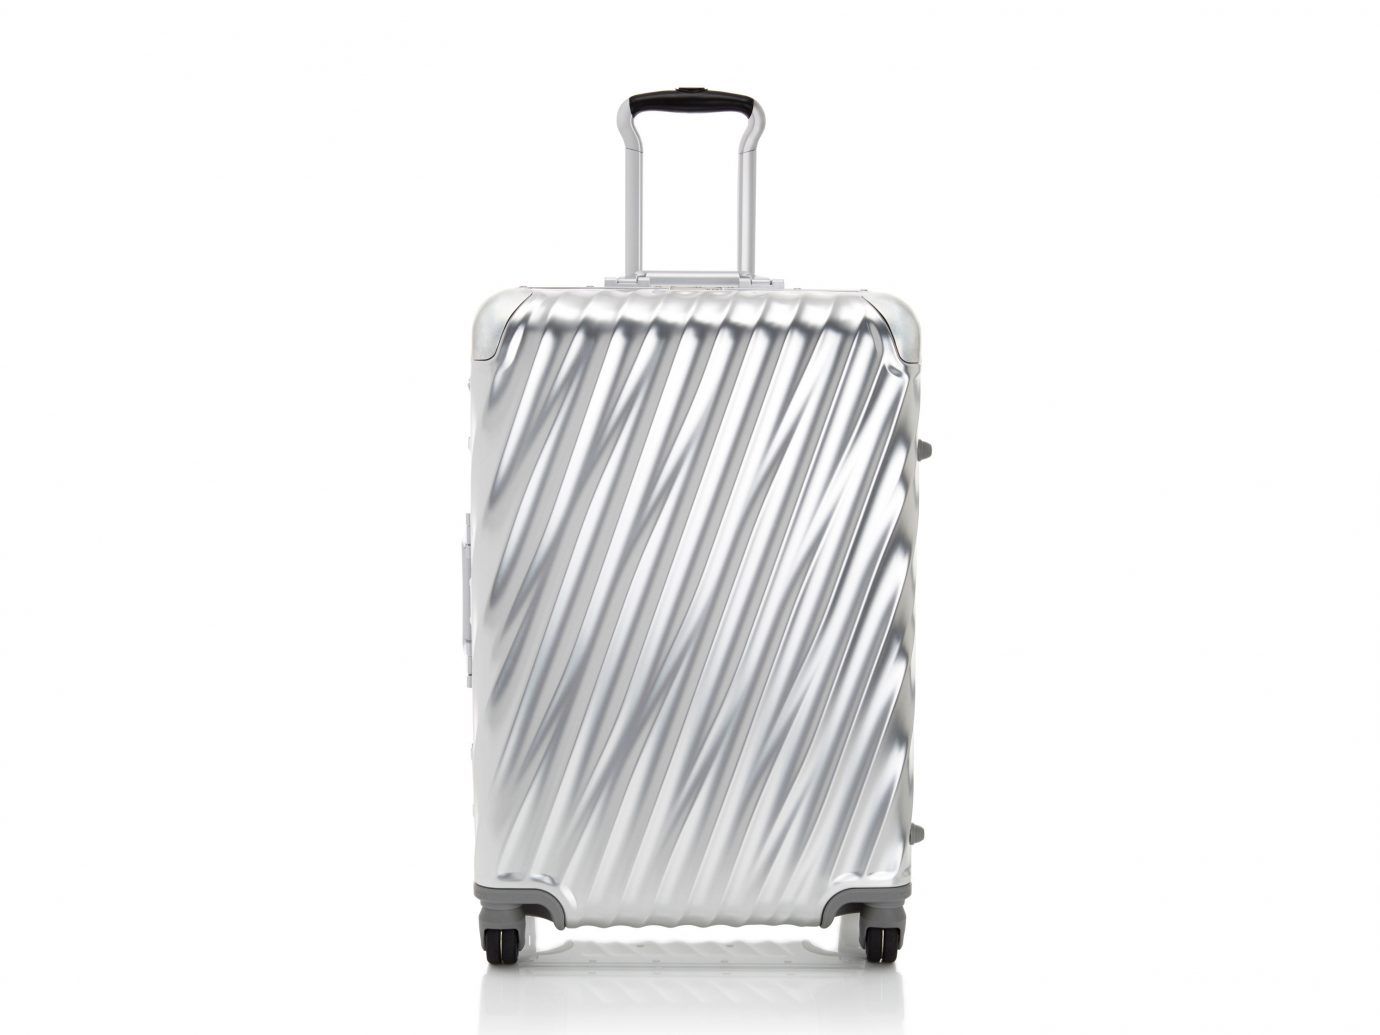 Style + Design product suitcase hand luggage